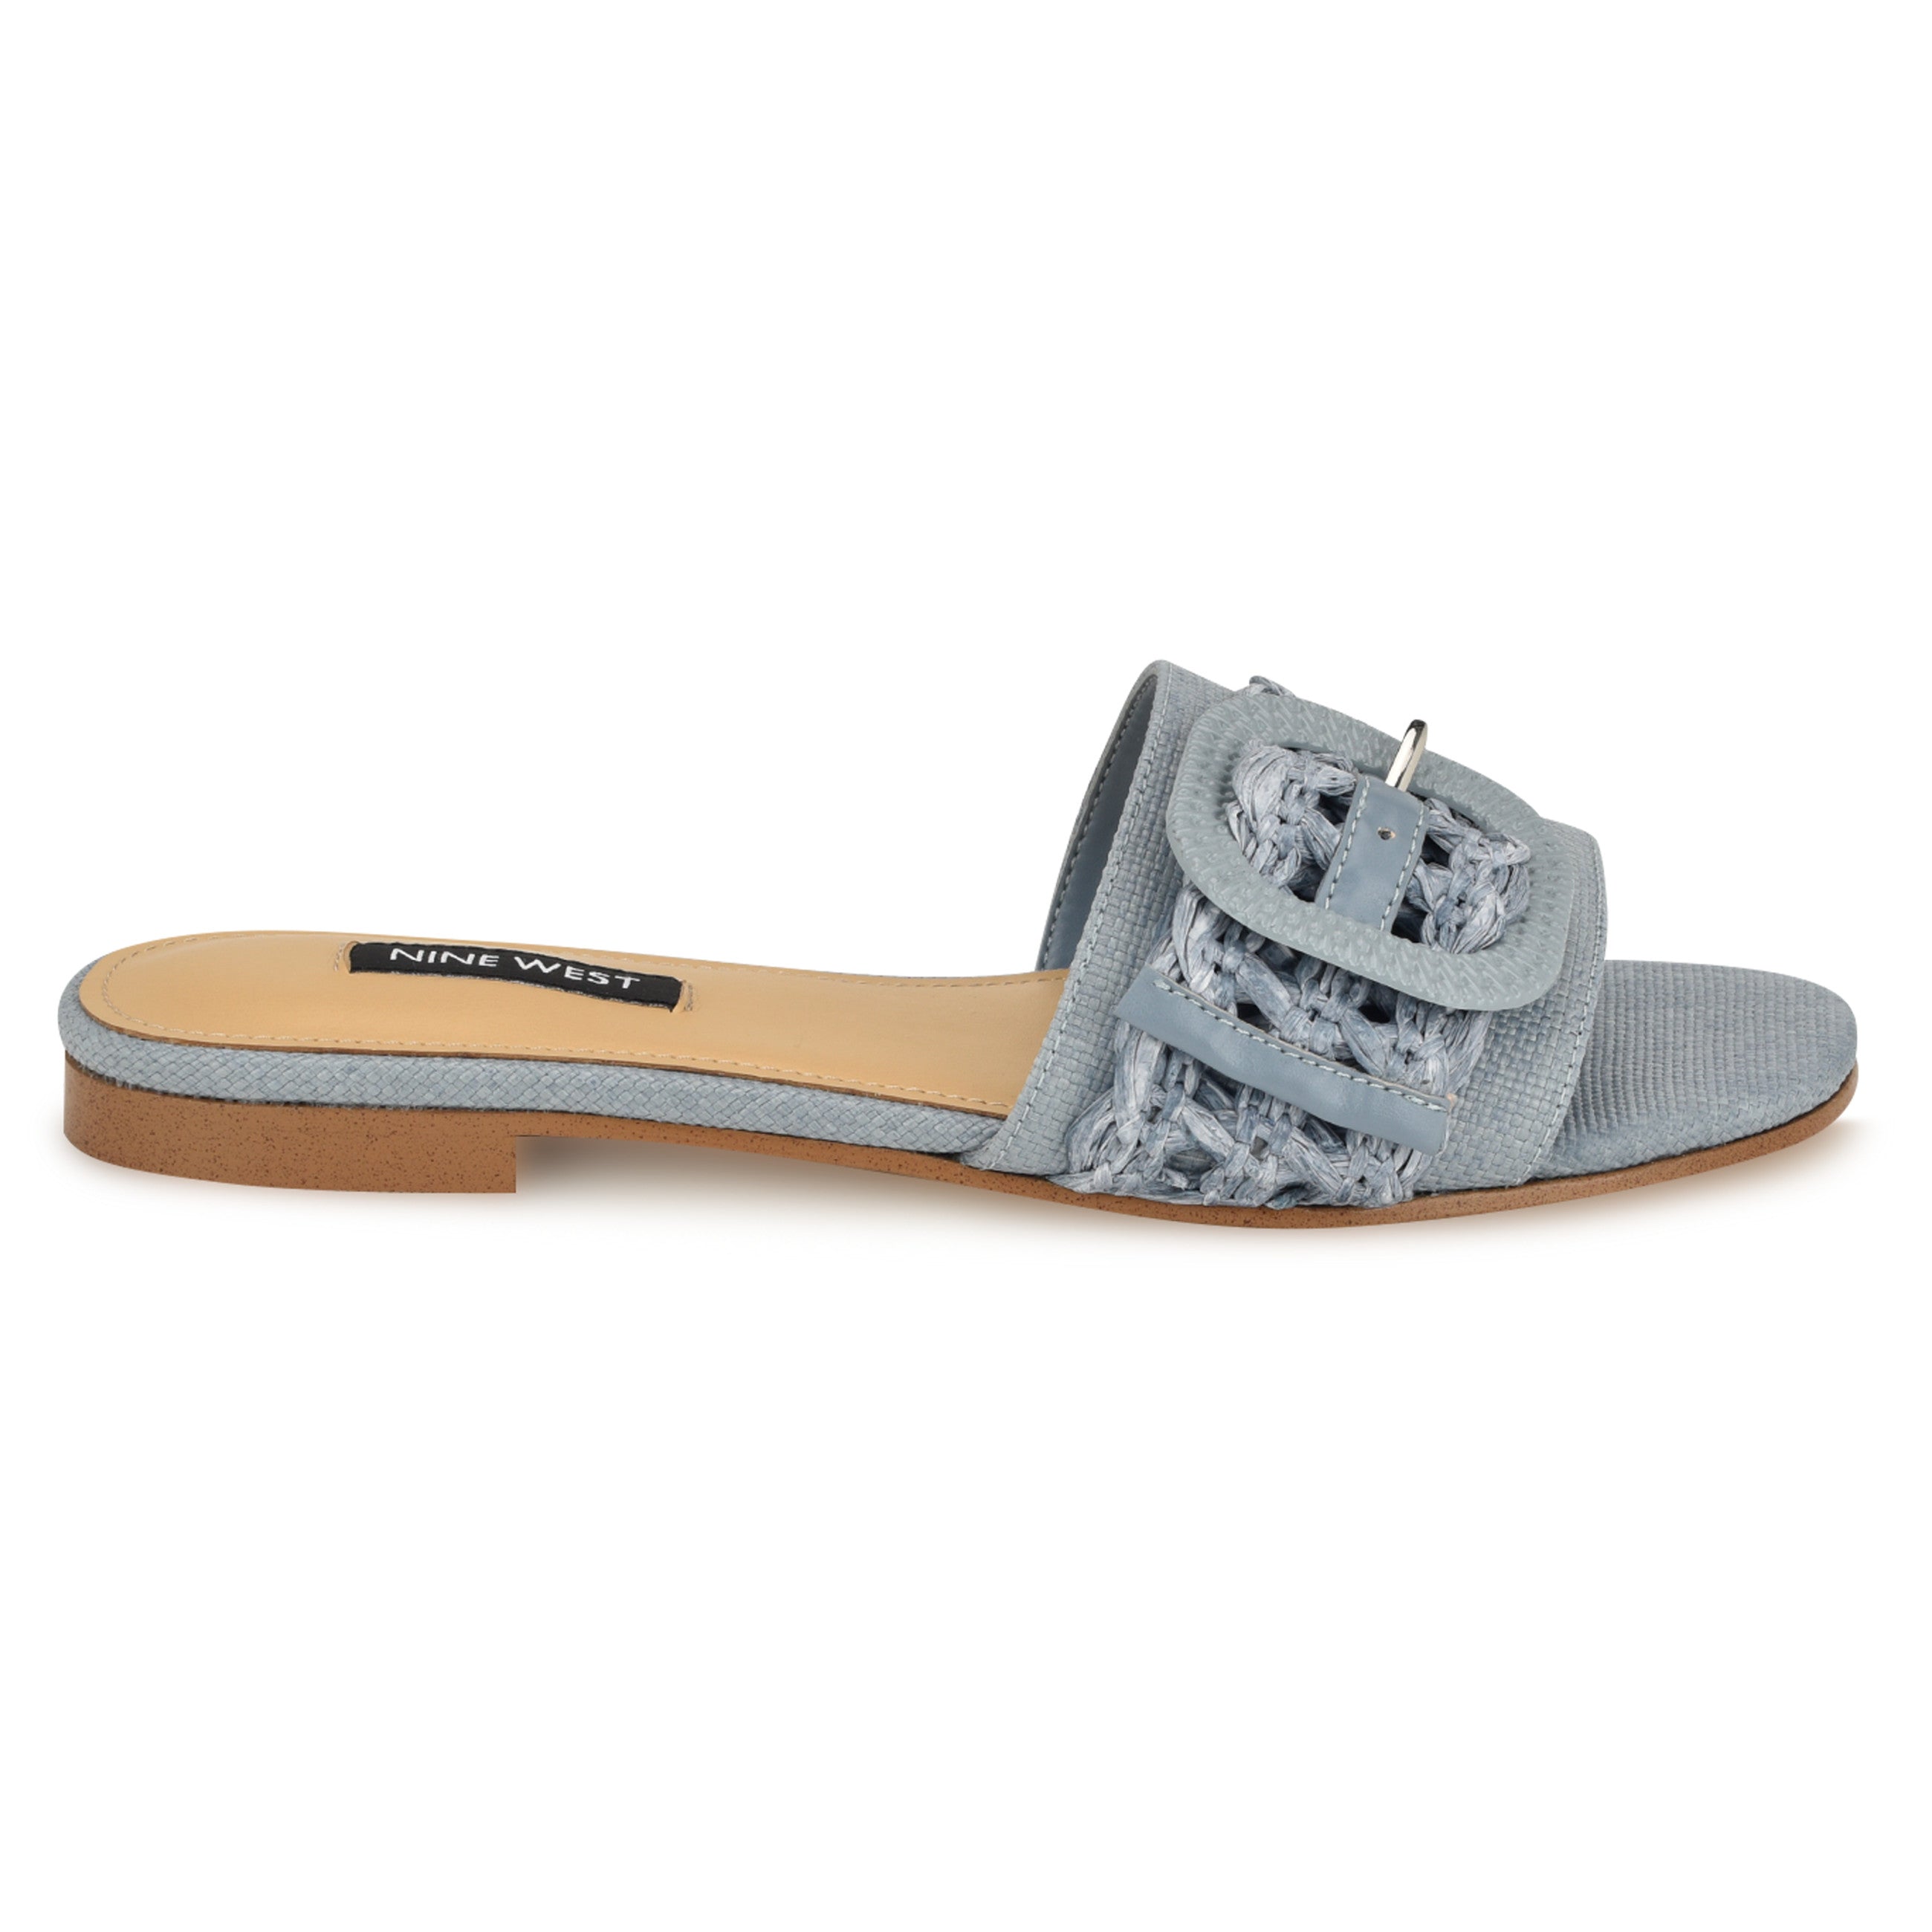 Hagleigh Flat Slide Sandals